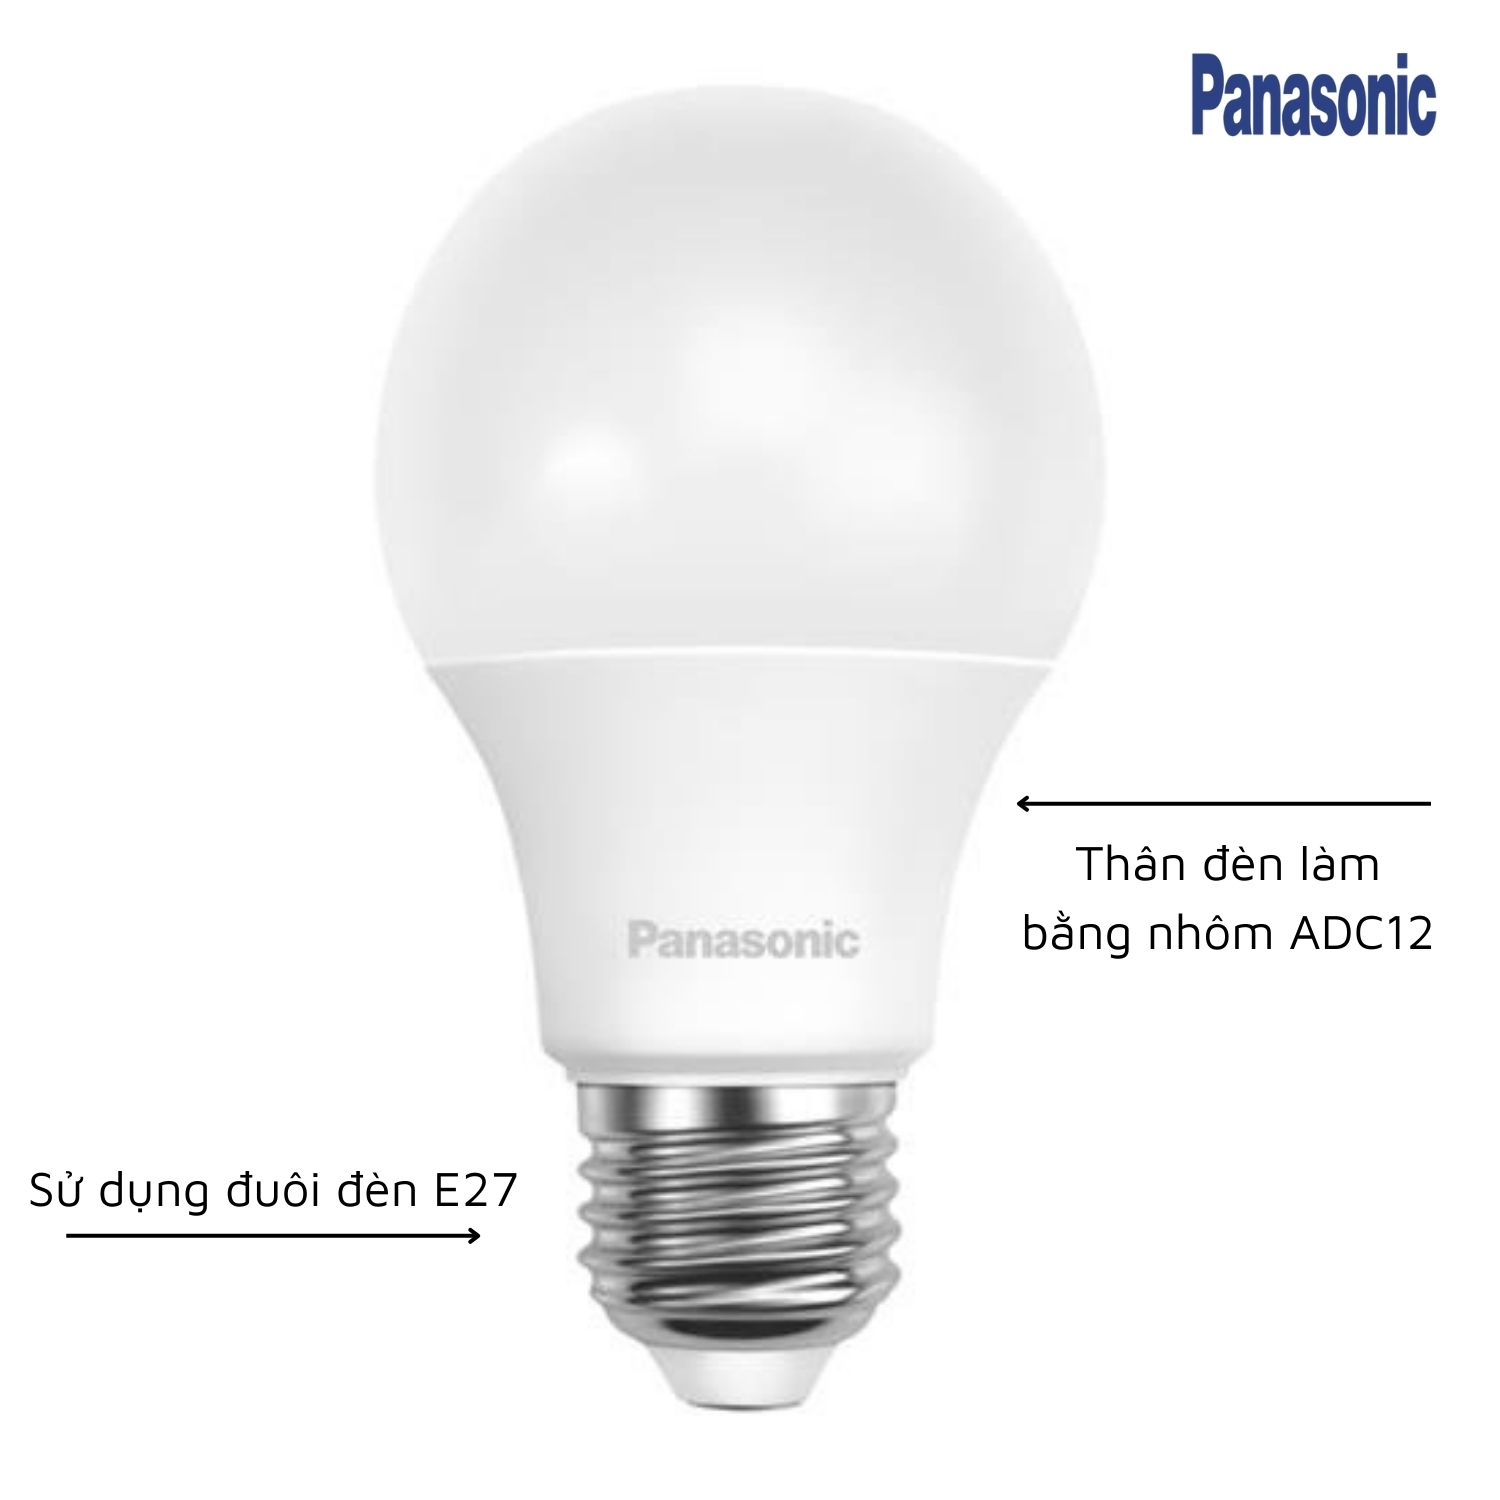 Đèn LED Basic Bulb Panasonic LDACH06LG1A7 / LDACH06WG1A7 / LDACH06DG1A7 6W